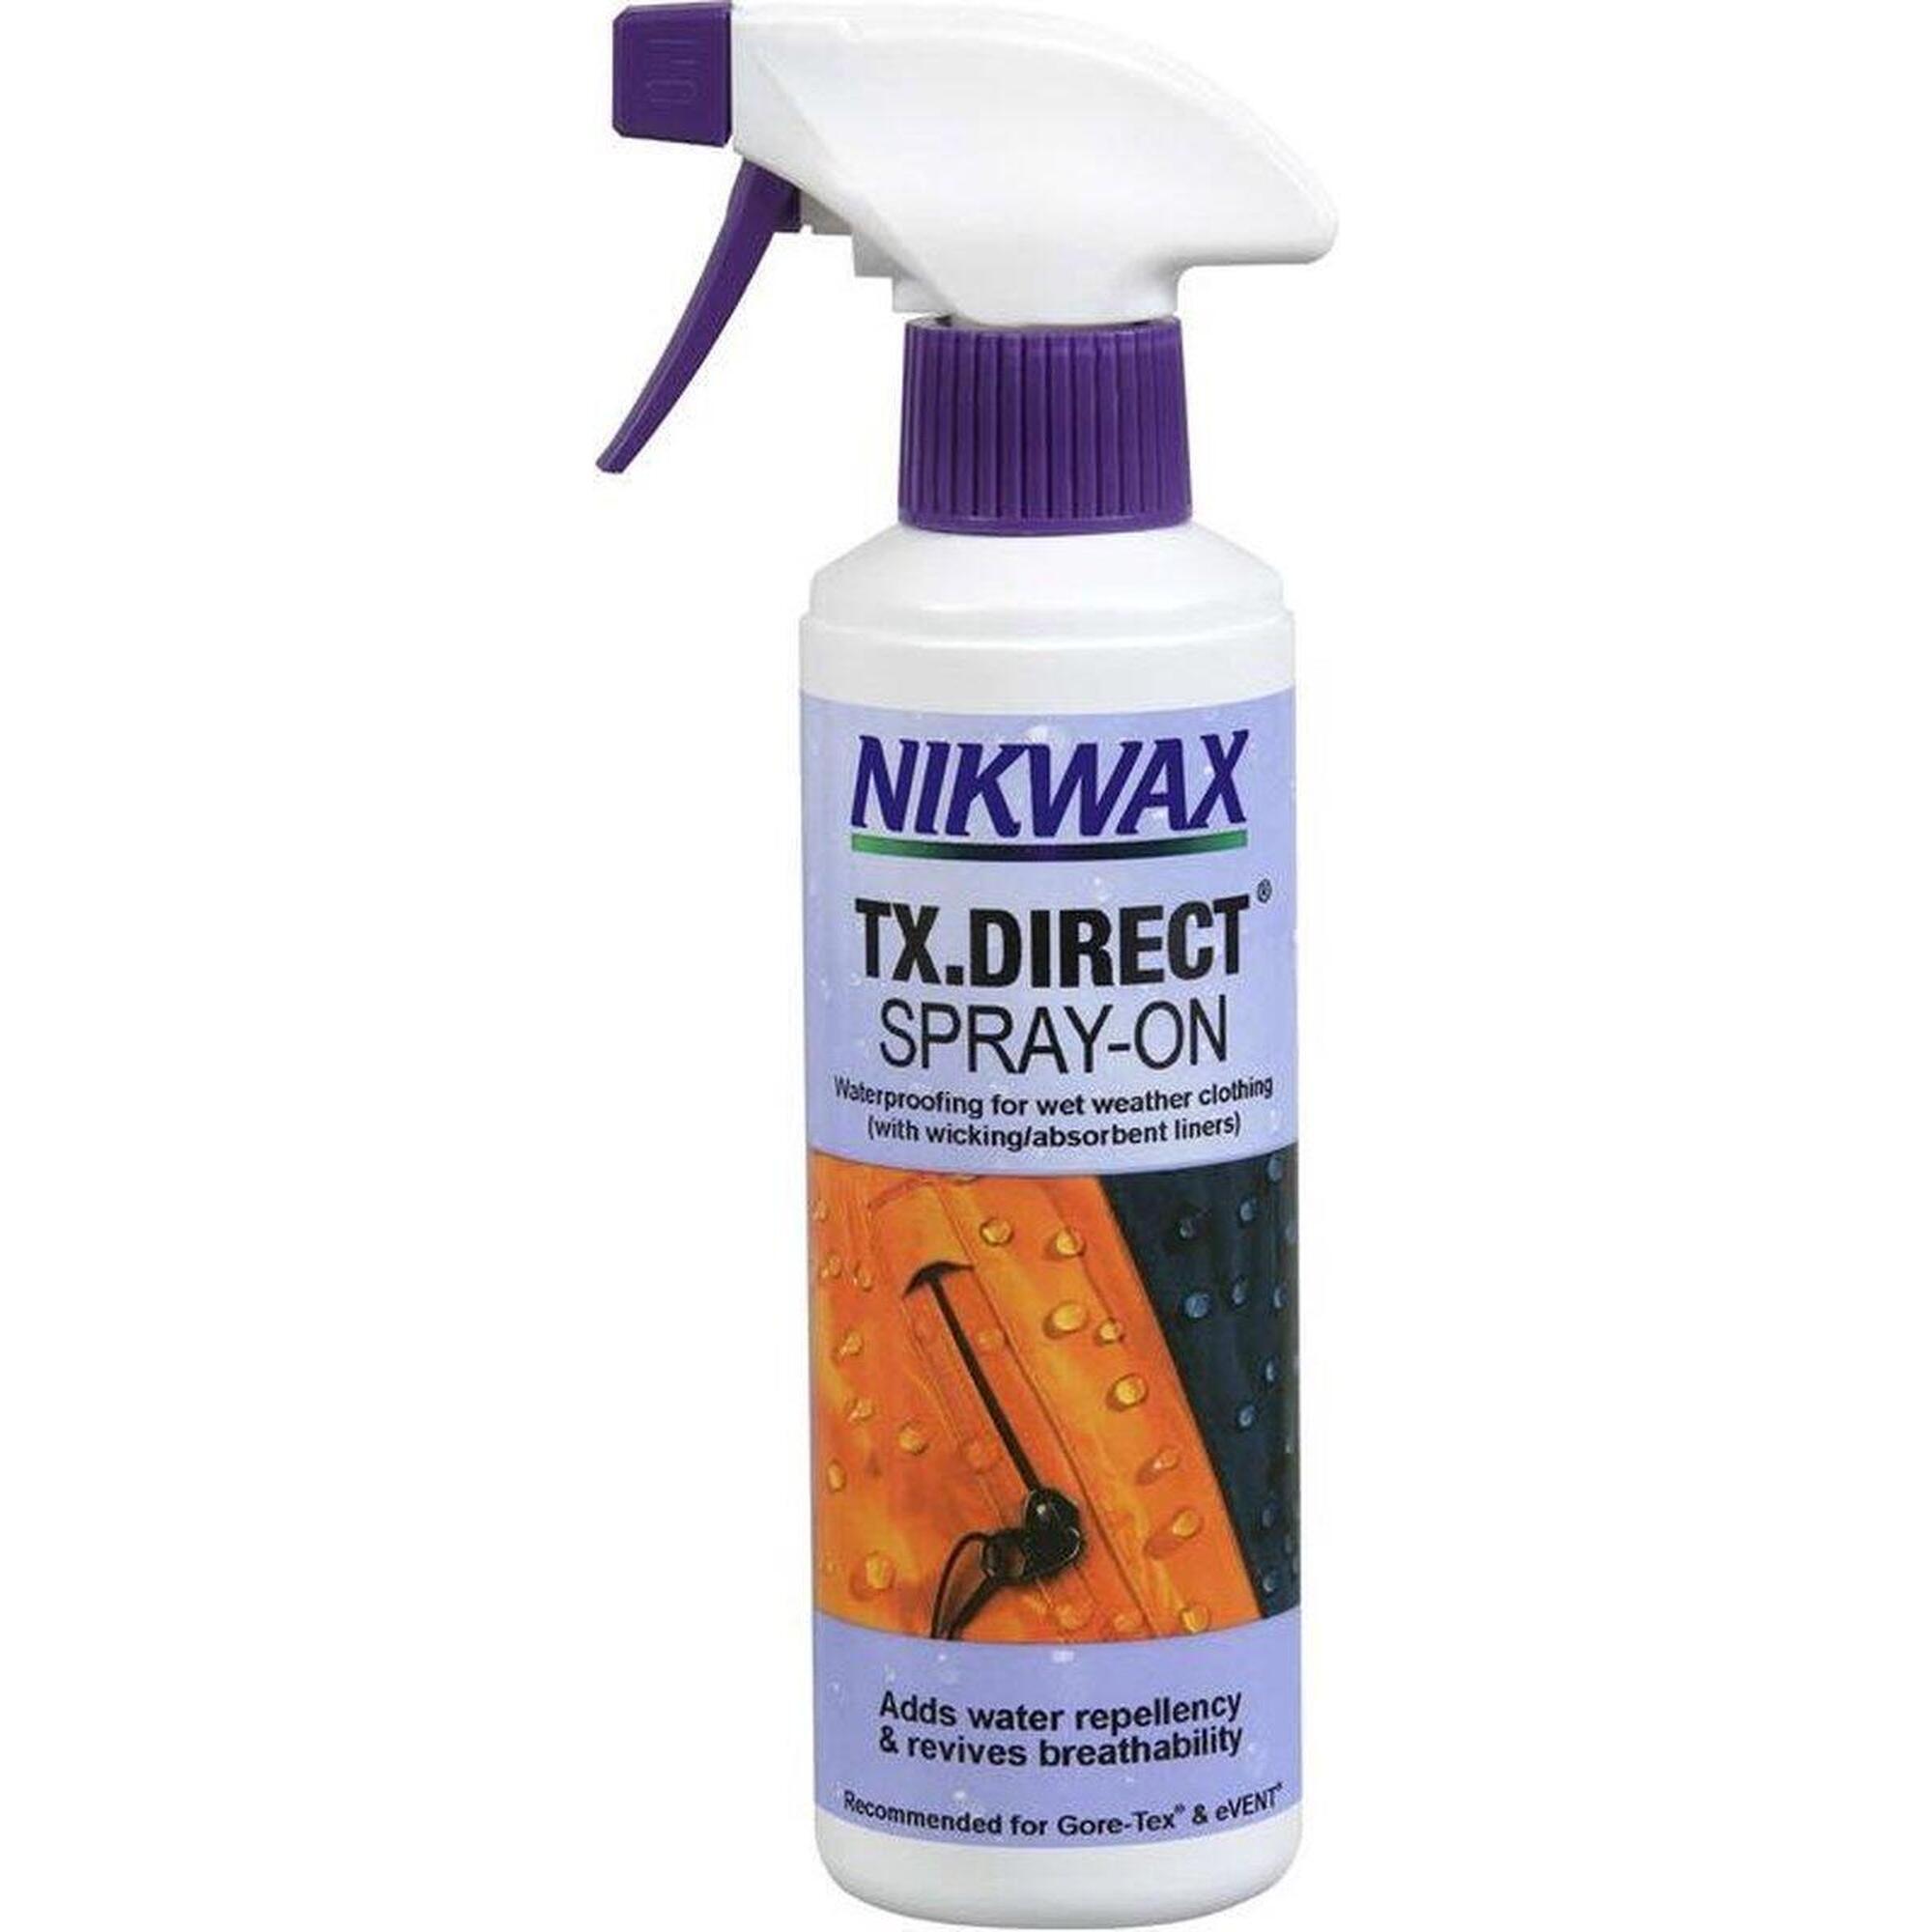 Traitement imperméabilisant 300ML - Nikwax TX Direct Spray-On